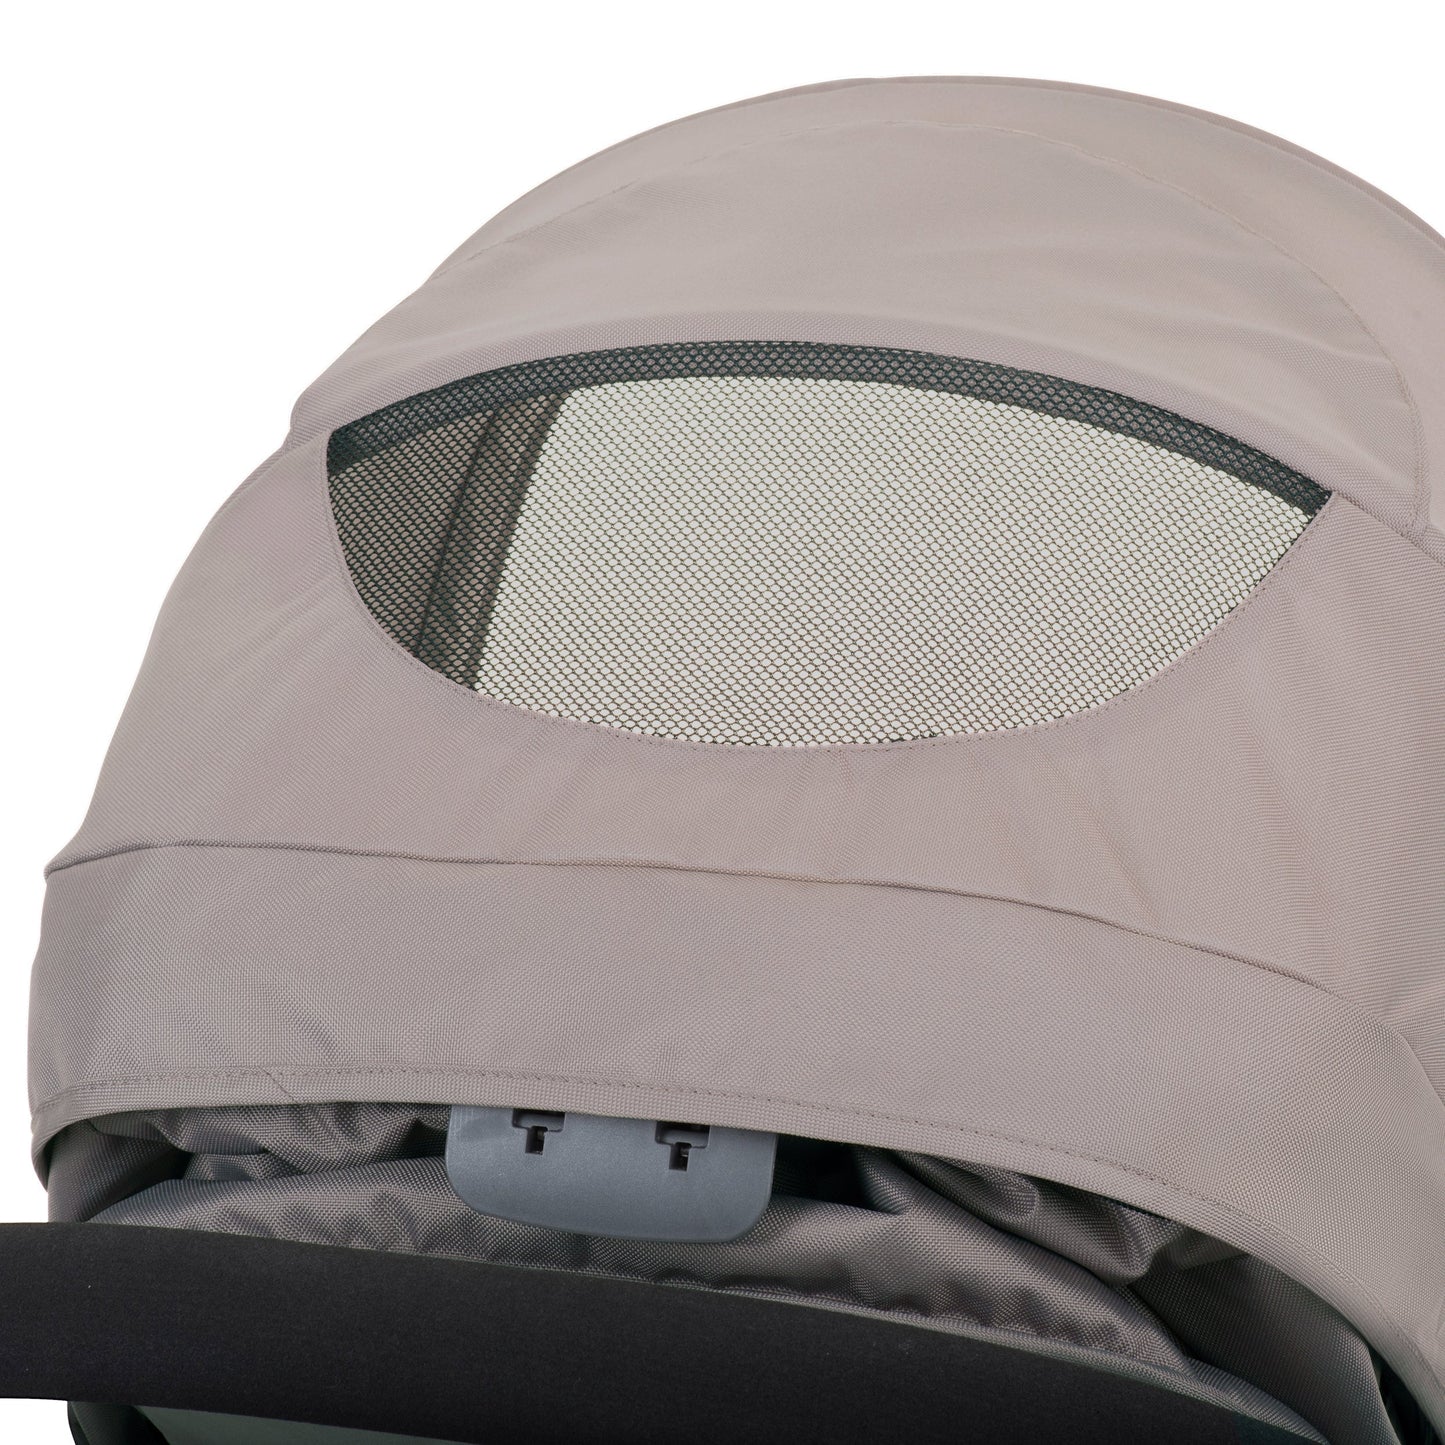 Evenflo Pivot Modular Travel System with LiteMax Infant Car Seat with Anti-Rebound Bar (Desert Tan)